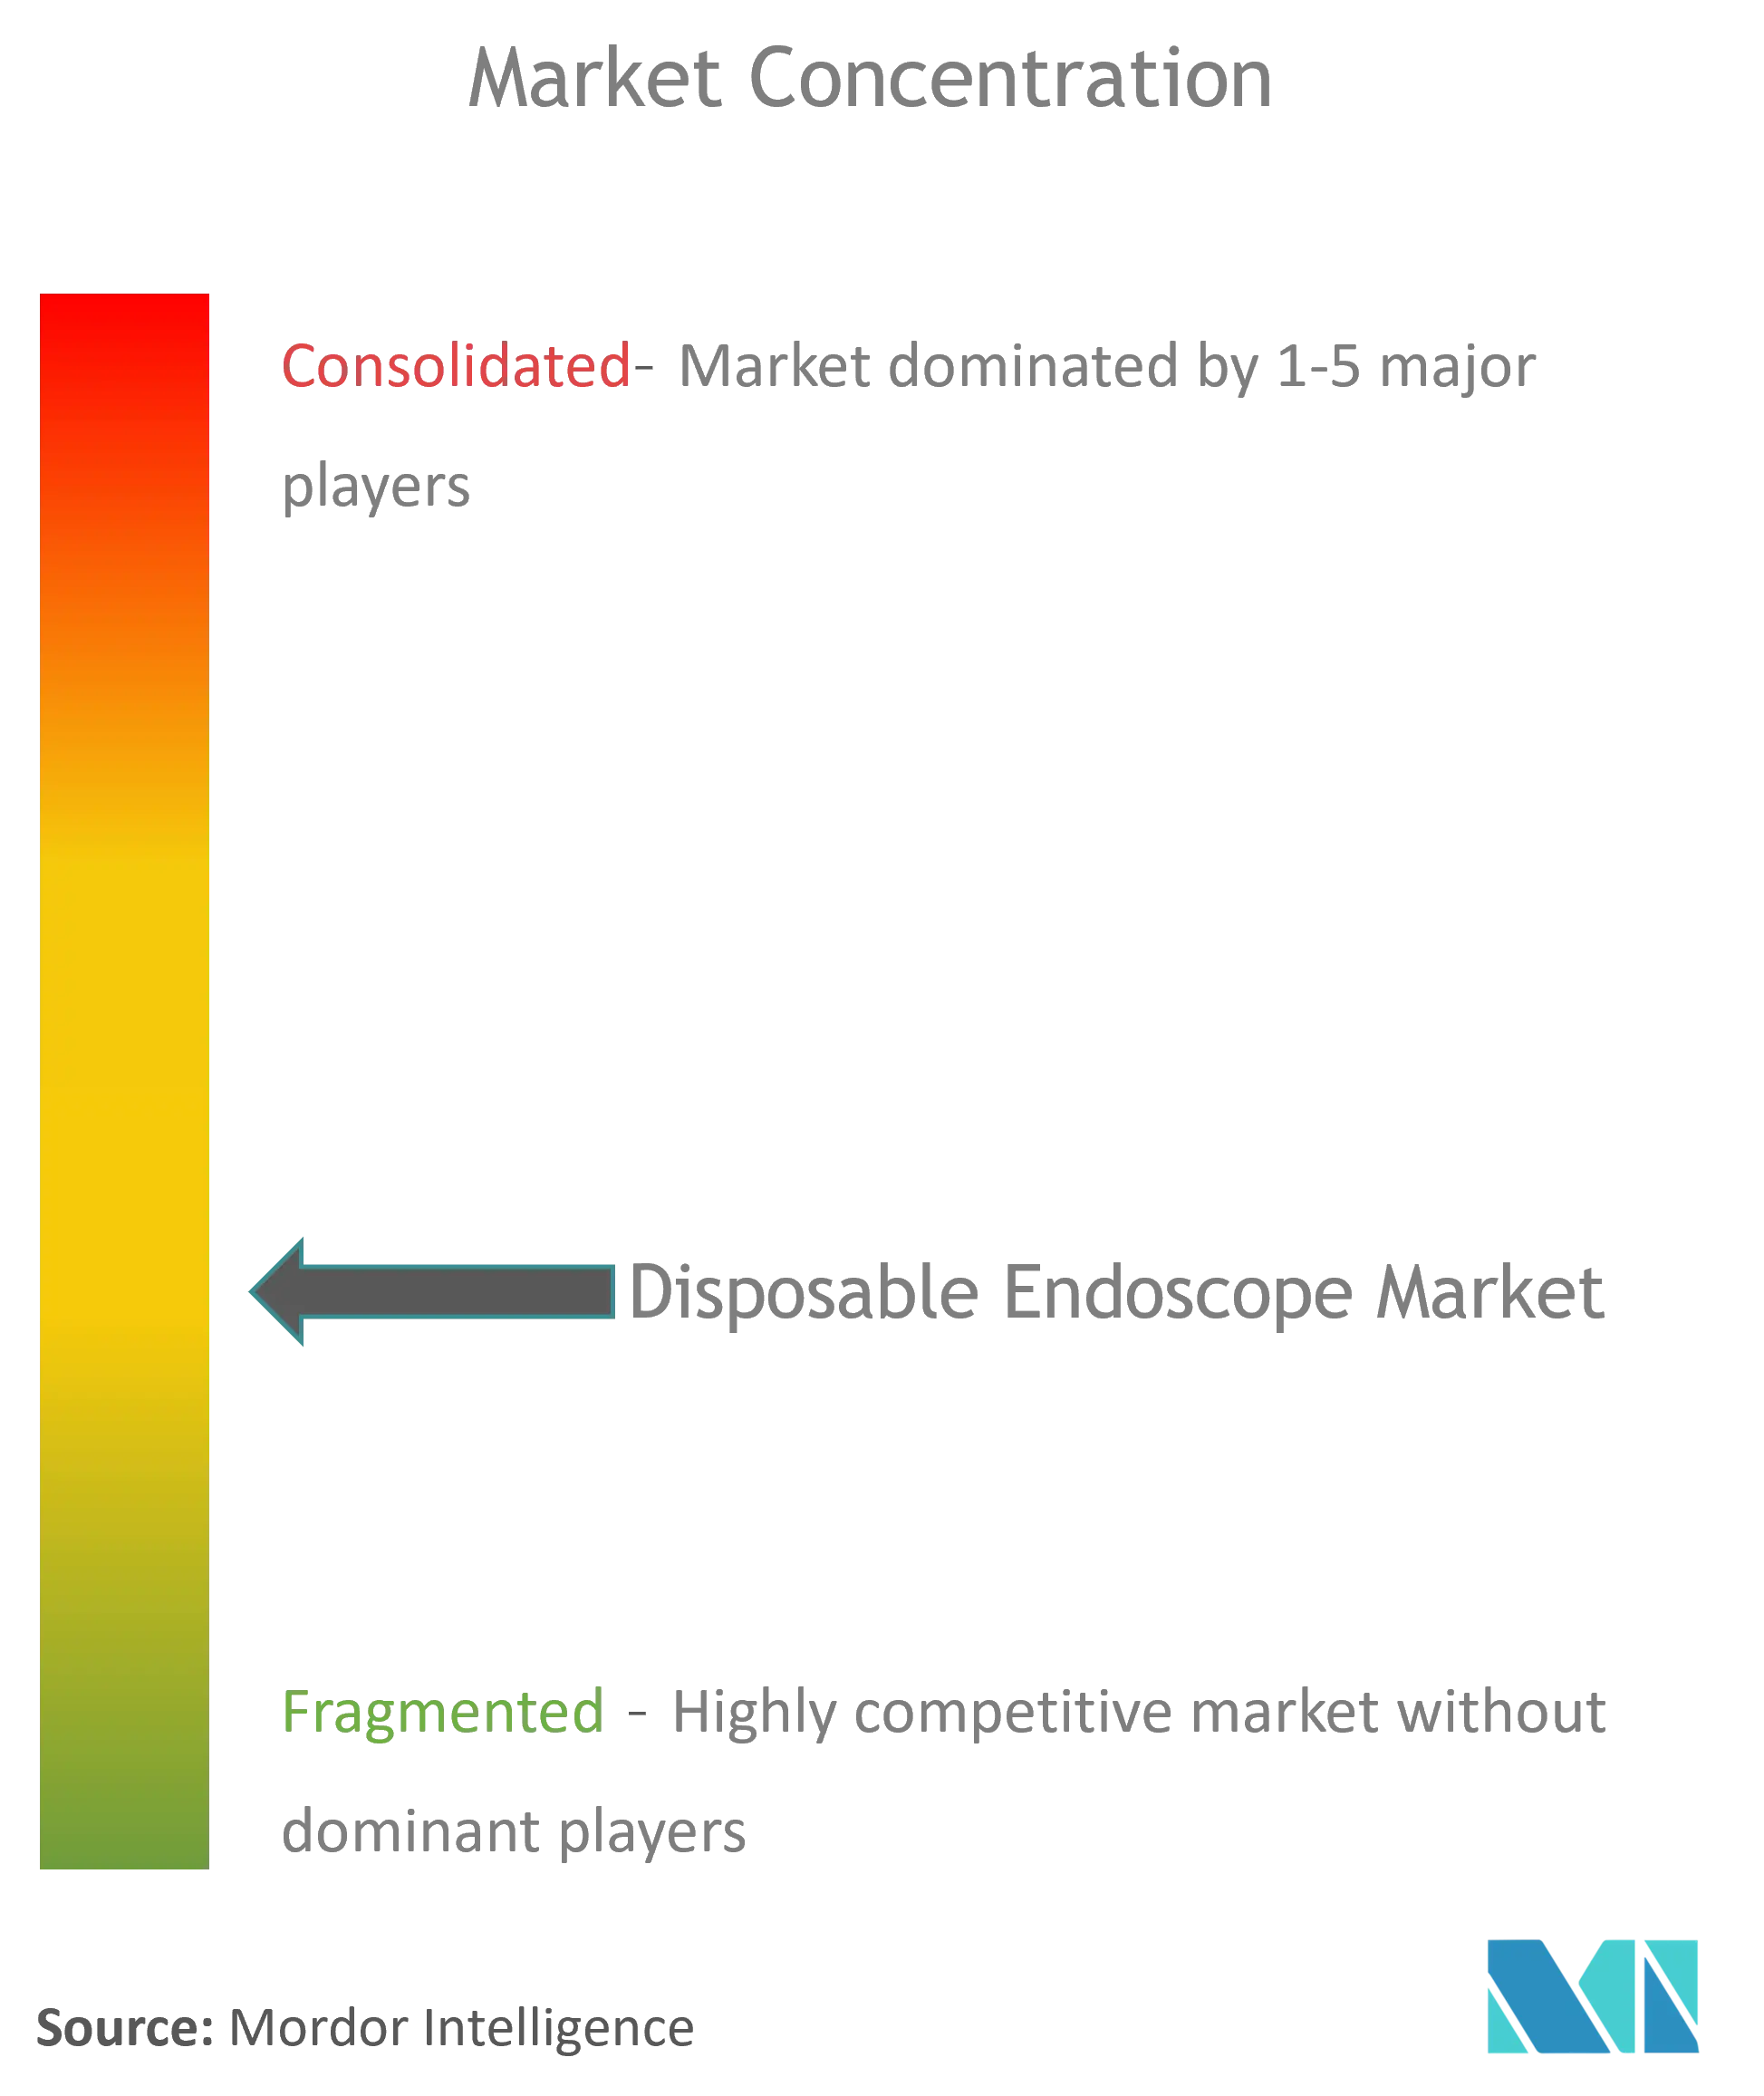 Disposable Endoscope Market Concentration